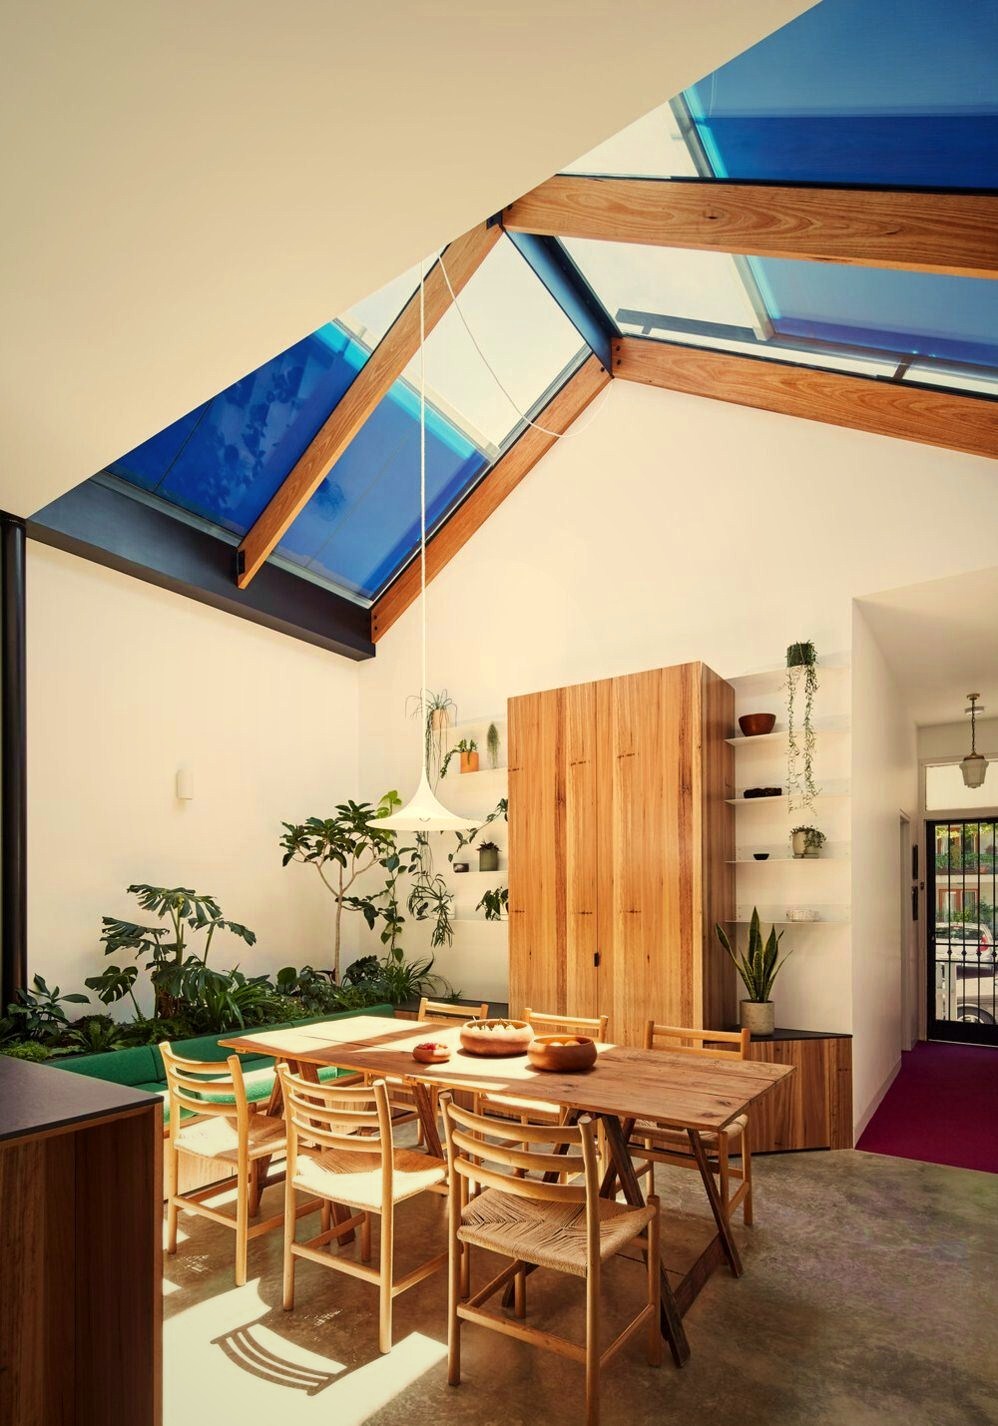 https://elonahome.com/wp-content/uploads/2020/12/Modern-wooden-kitchen-model-with-adjustable-transparent-roof-to-support-indoor-garden-improving-more-natural-vibe-2.jpg